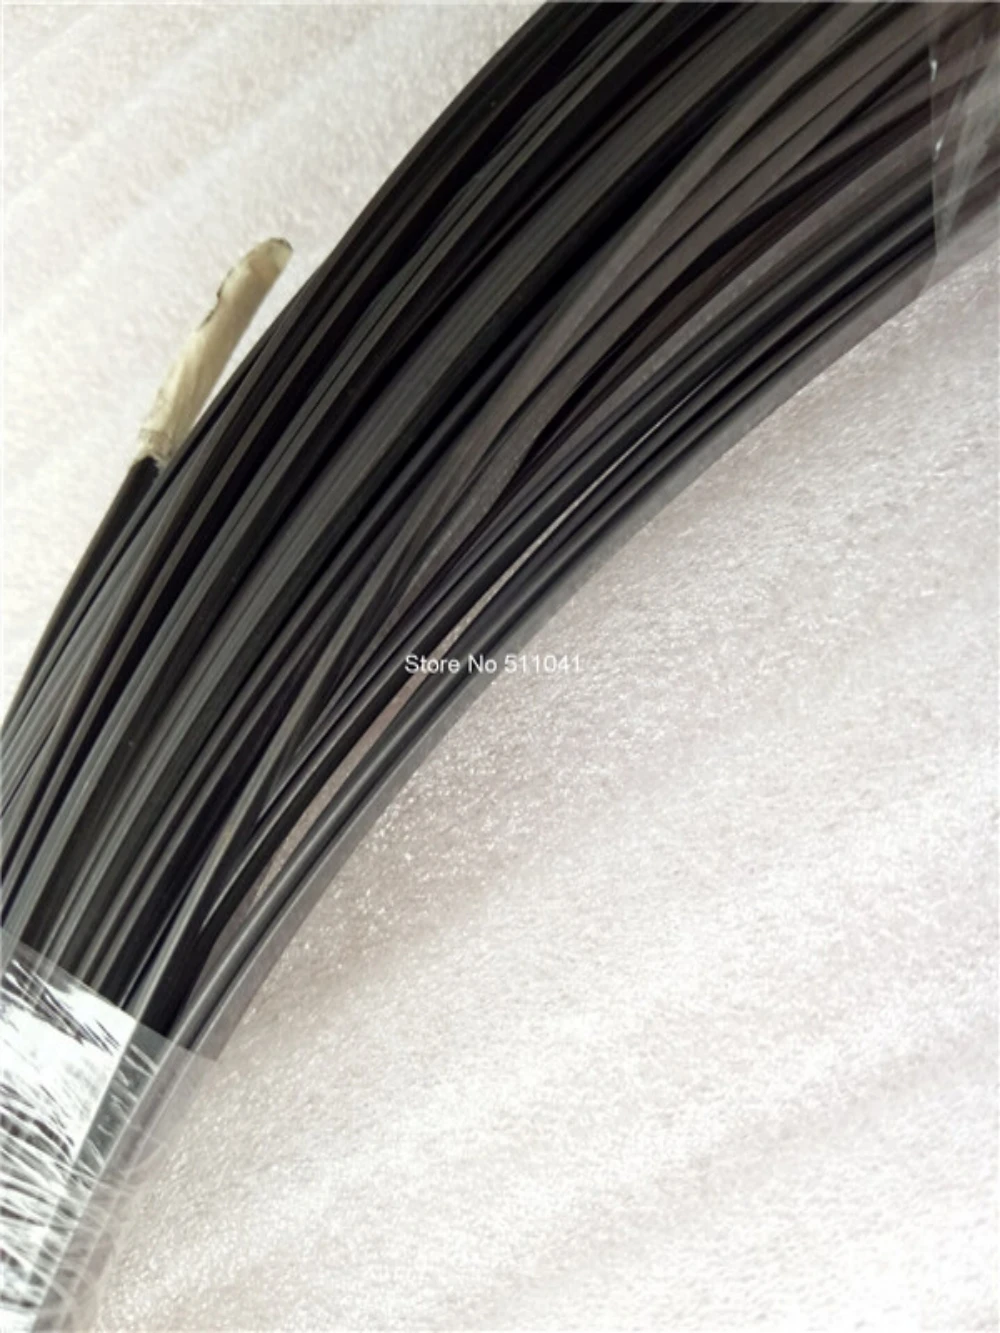 Nitinol shape memory alloy flat wire dia 2.1mm*0.7mm ,super elastic,Nitinol SMA Flat Wire for bra,1kg wholesale price